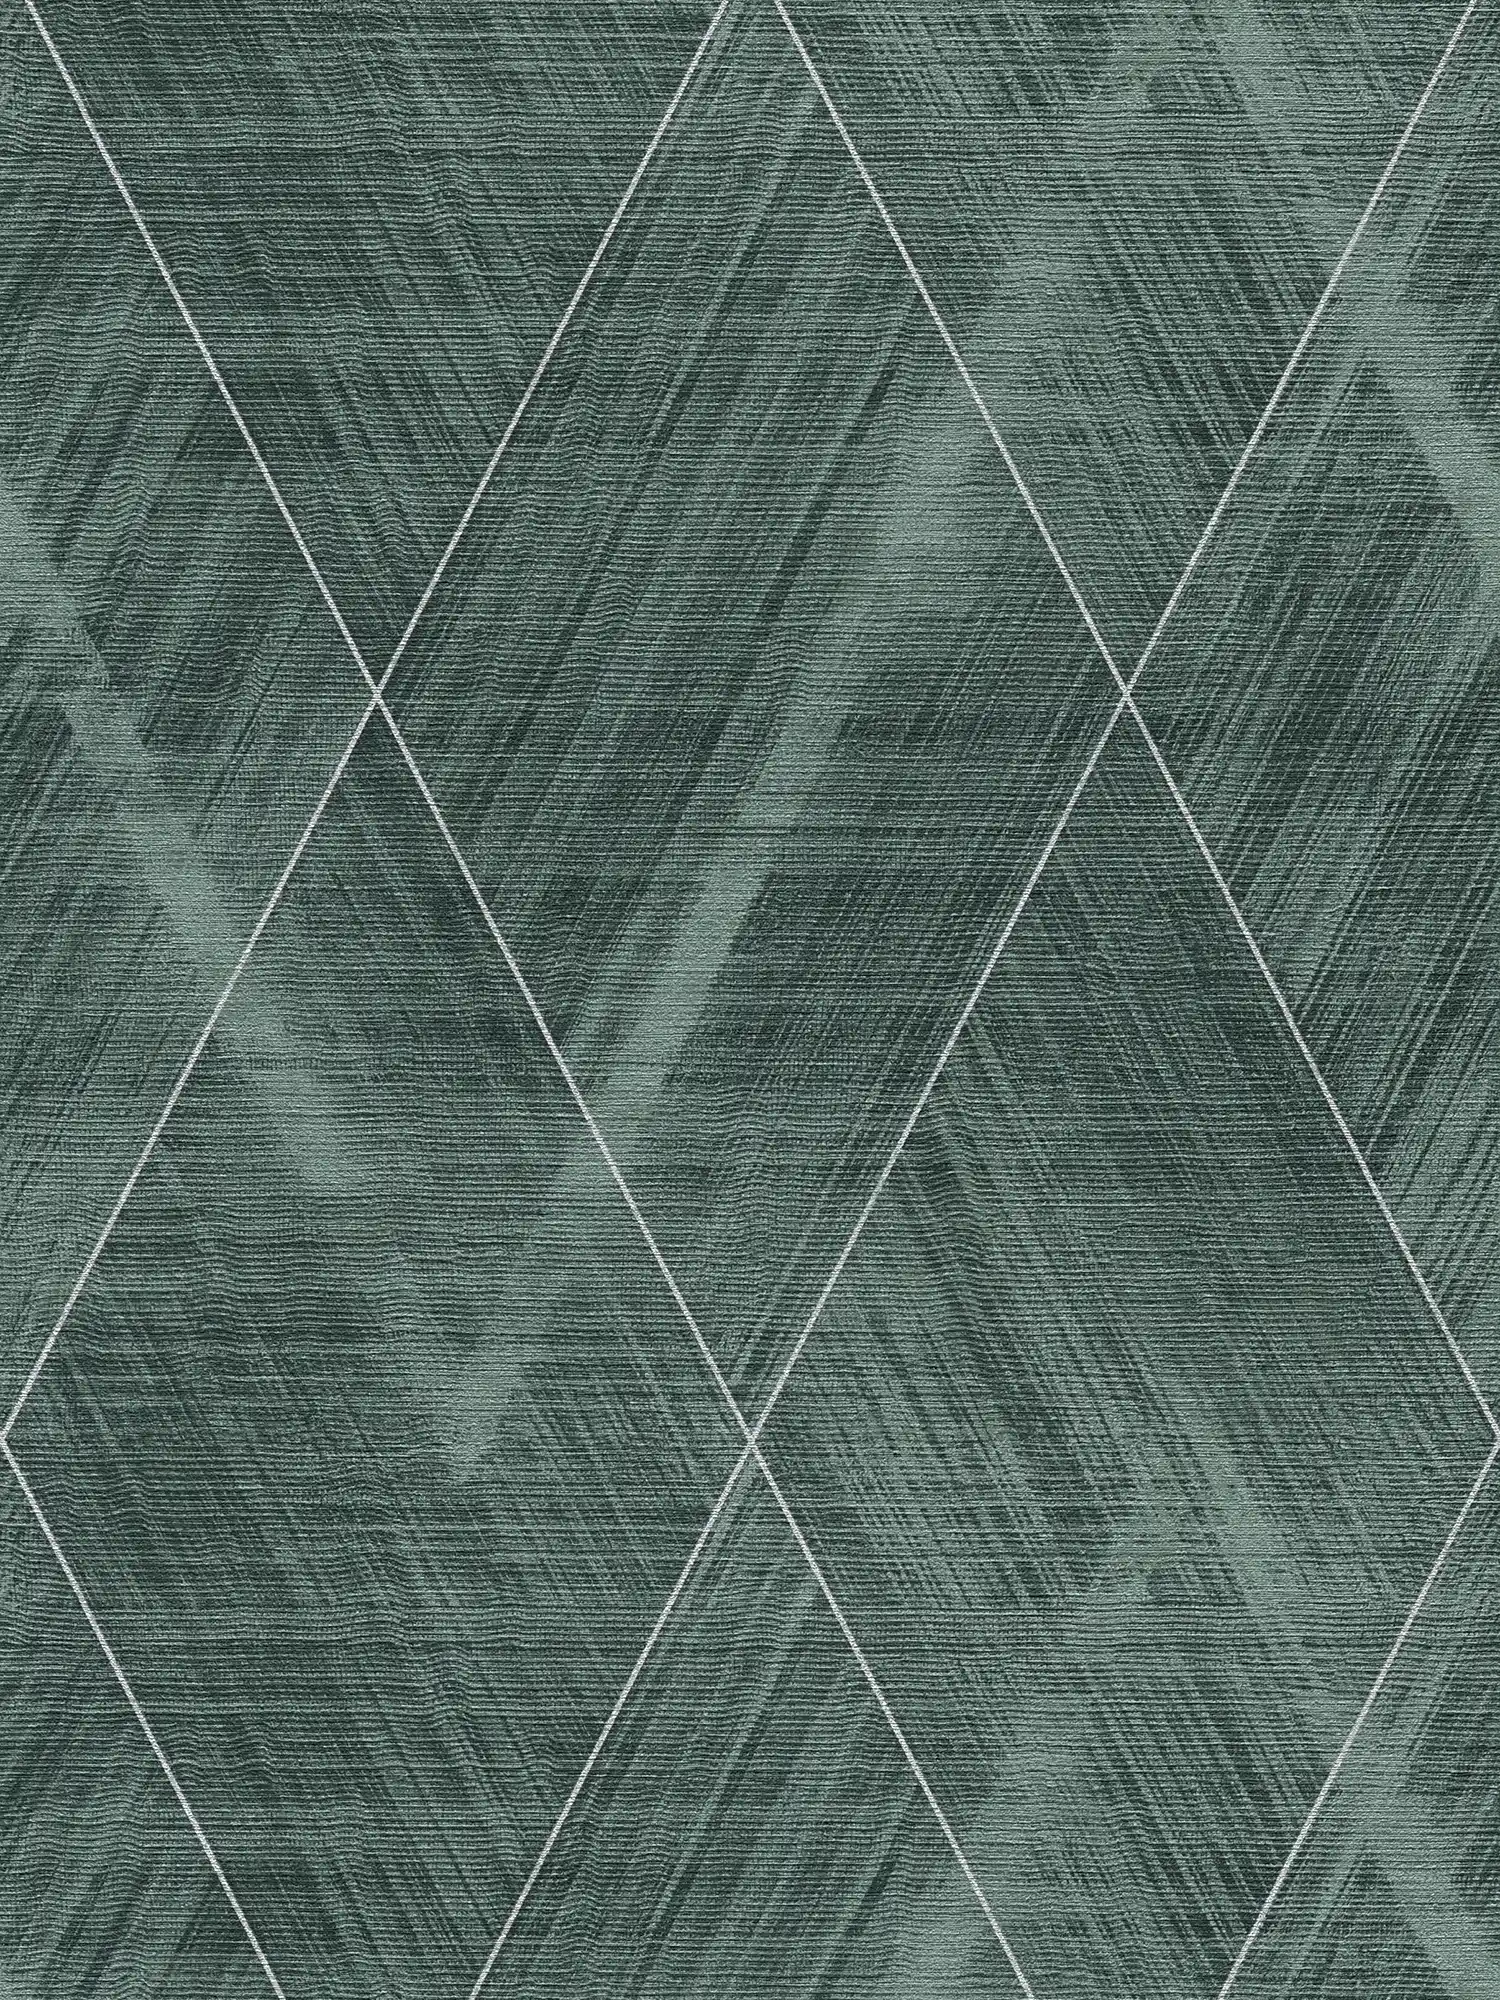         Lozenge wallpaper with mottled textile look - metallic, green
    